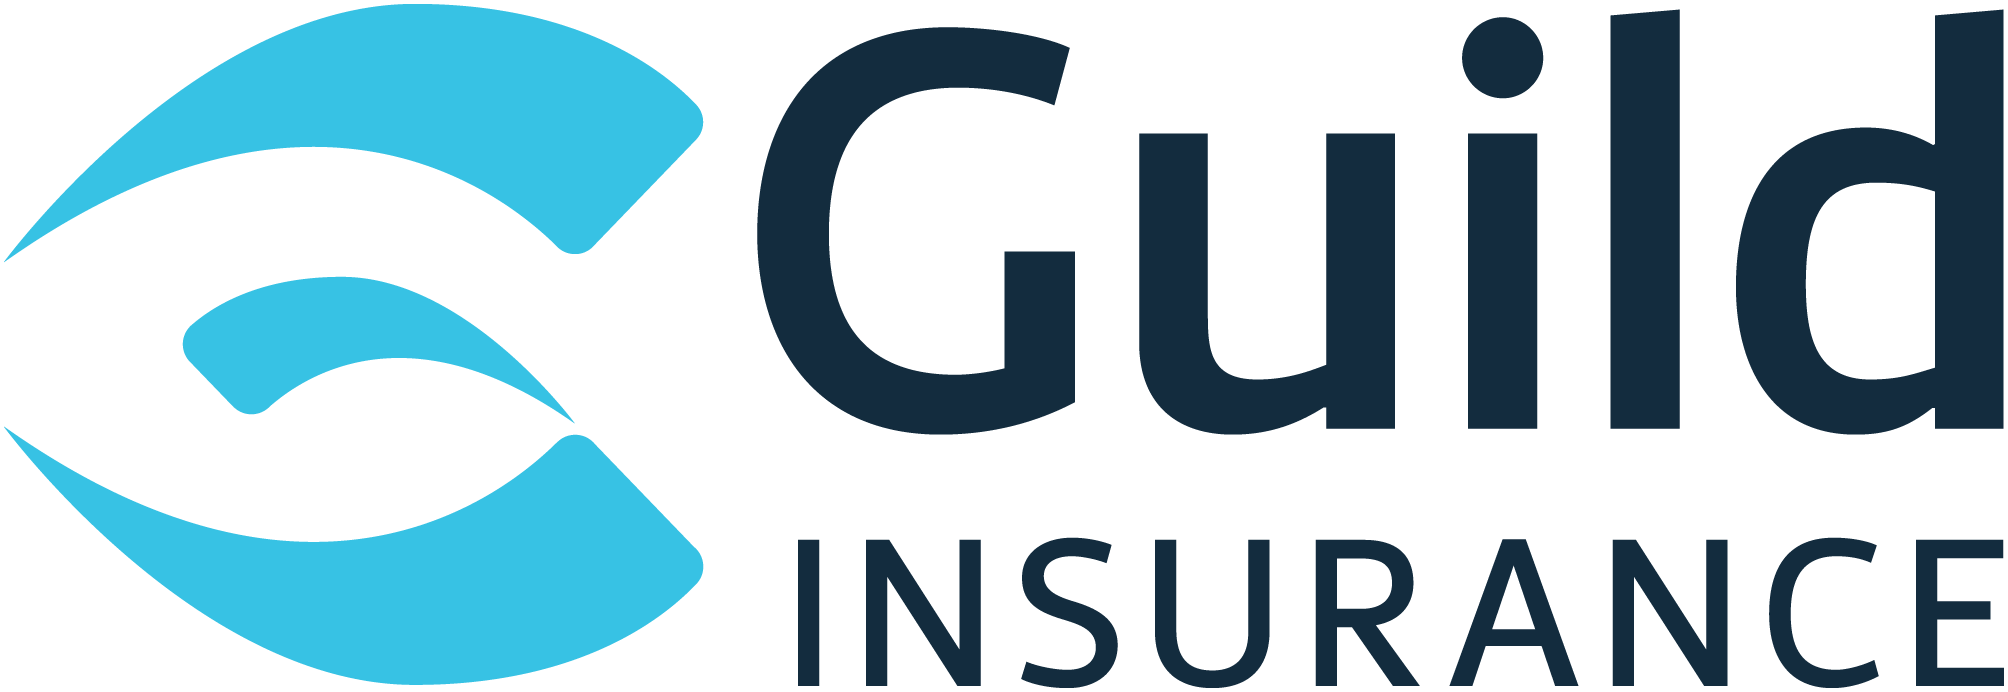 Guild Logo